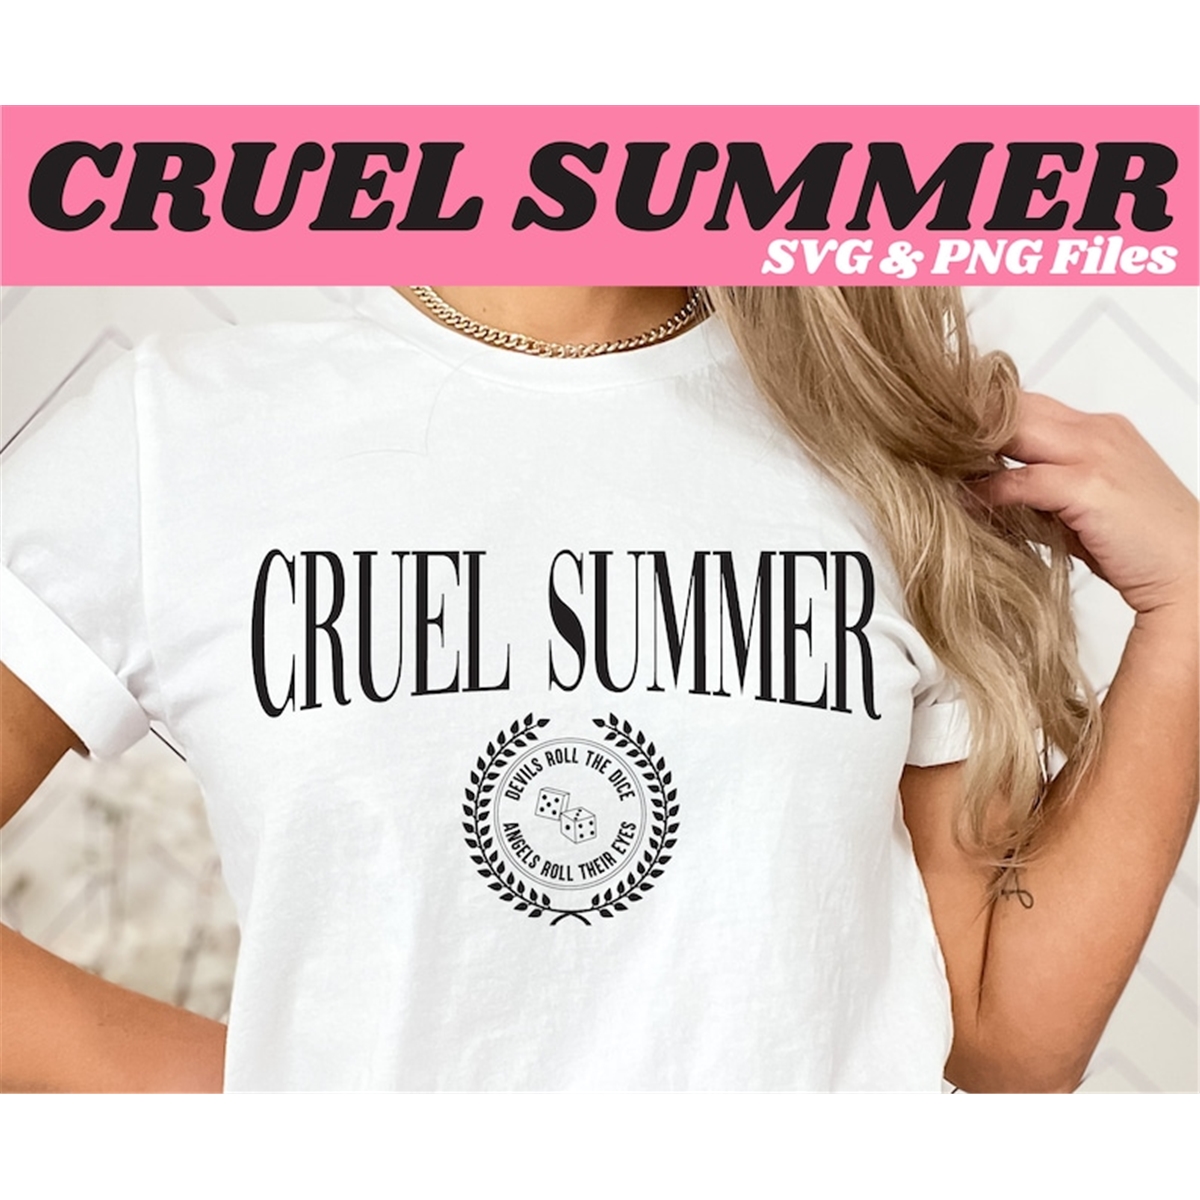 cruel-summer-taylor-swift-lover-png-svg-shirt-file-clipart-image-1